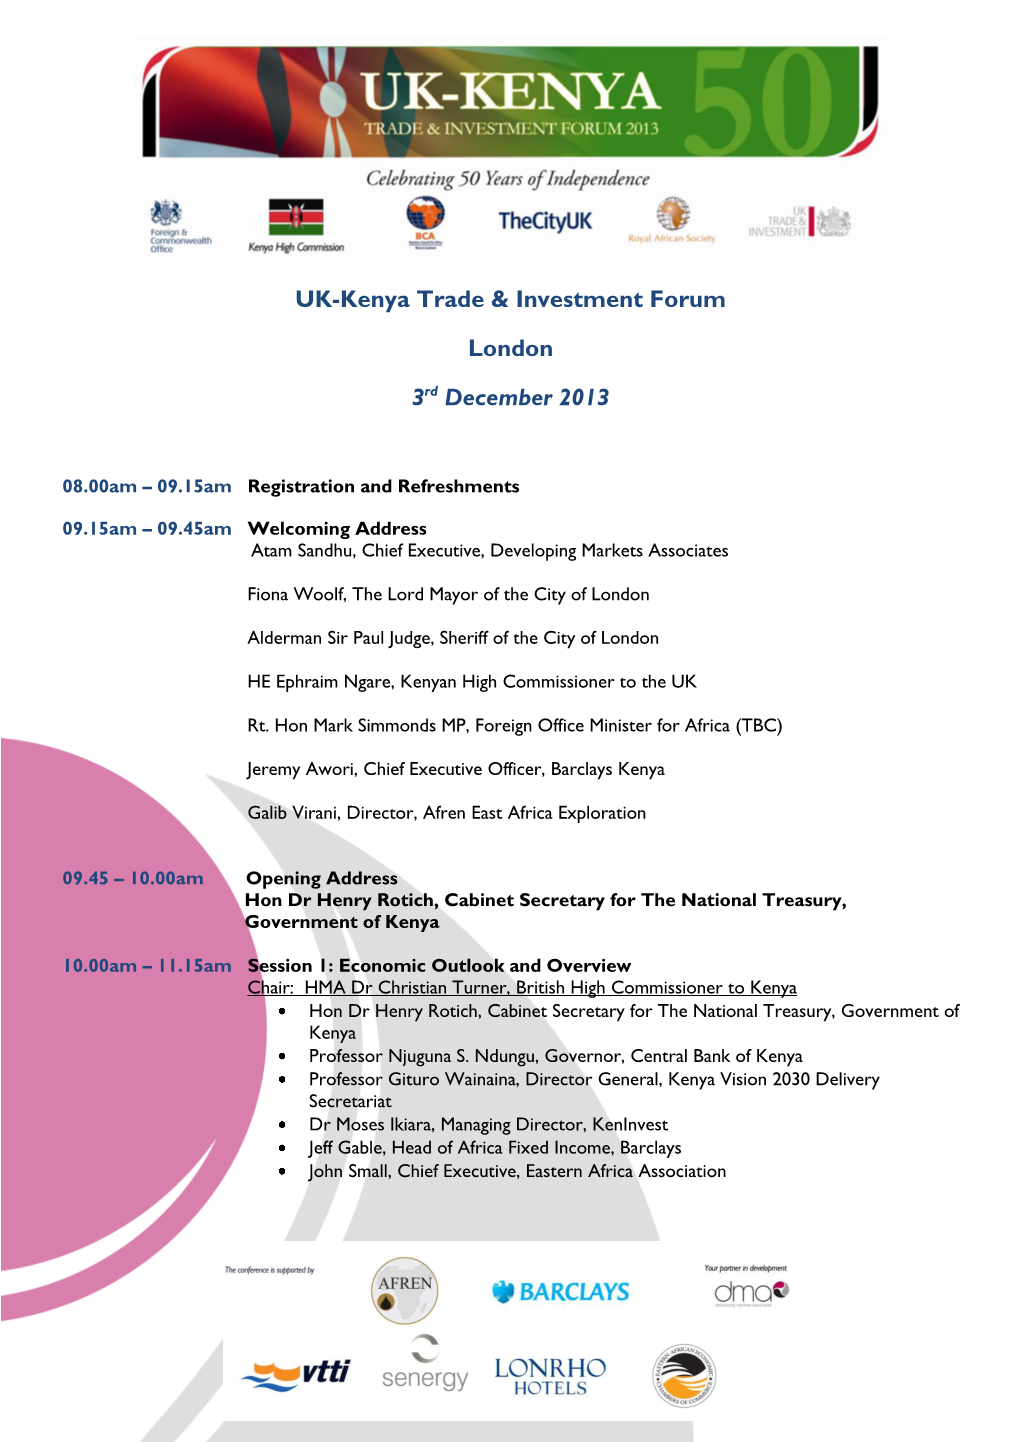 UK-Kenya Trade & Investment Forum London 3Rd December 2013